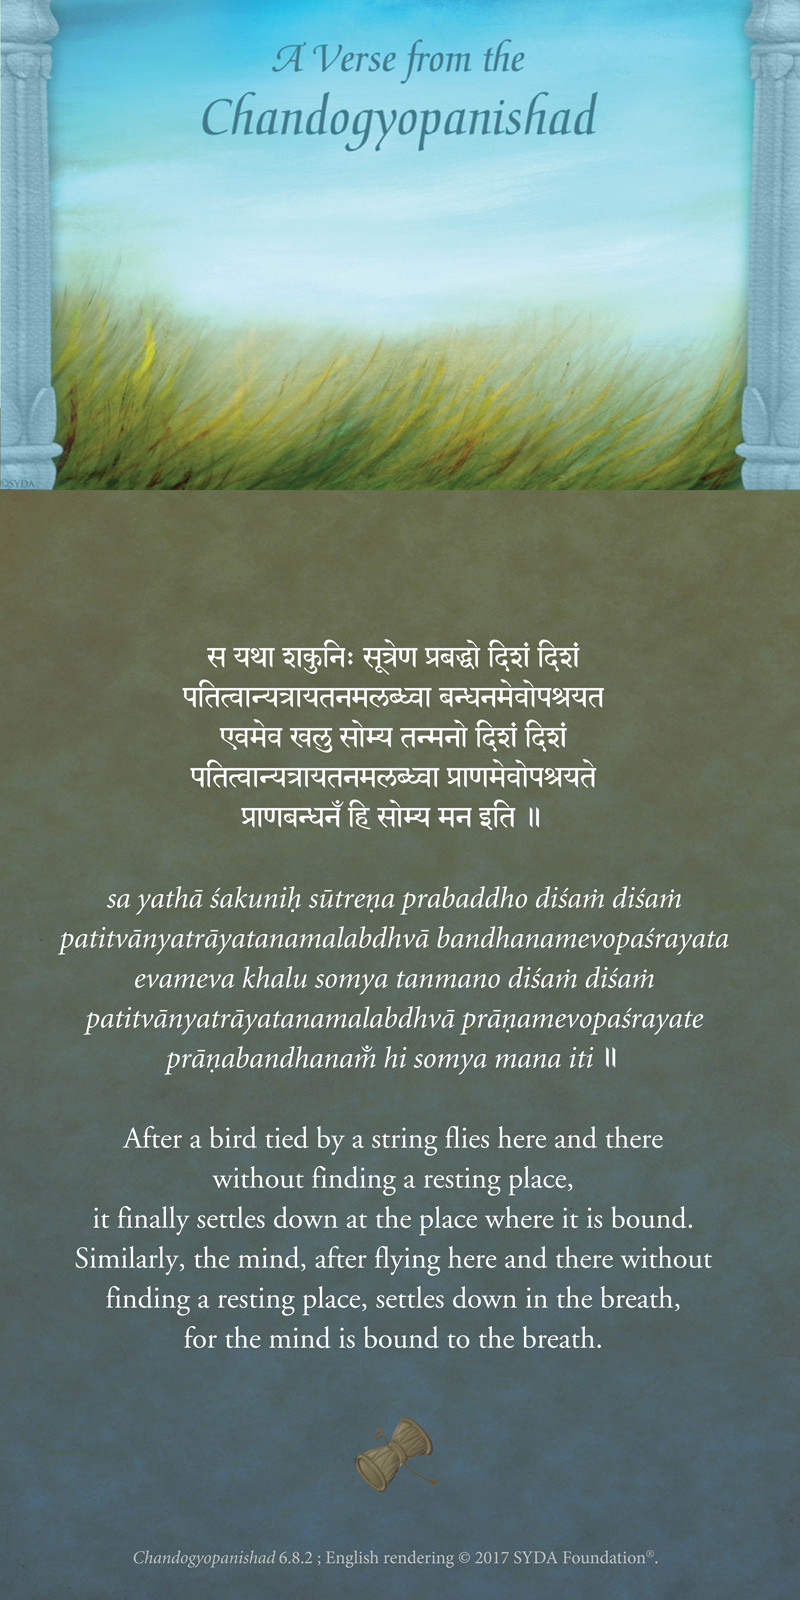 A Verse from the Chandogyopanishad